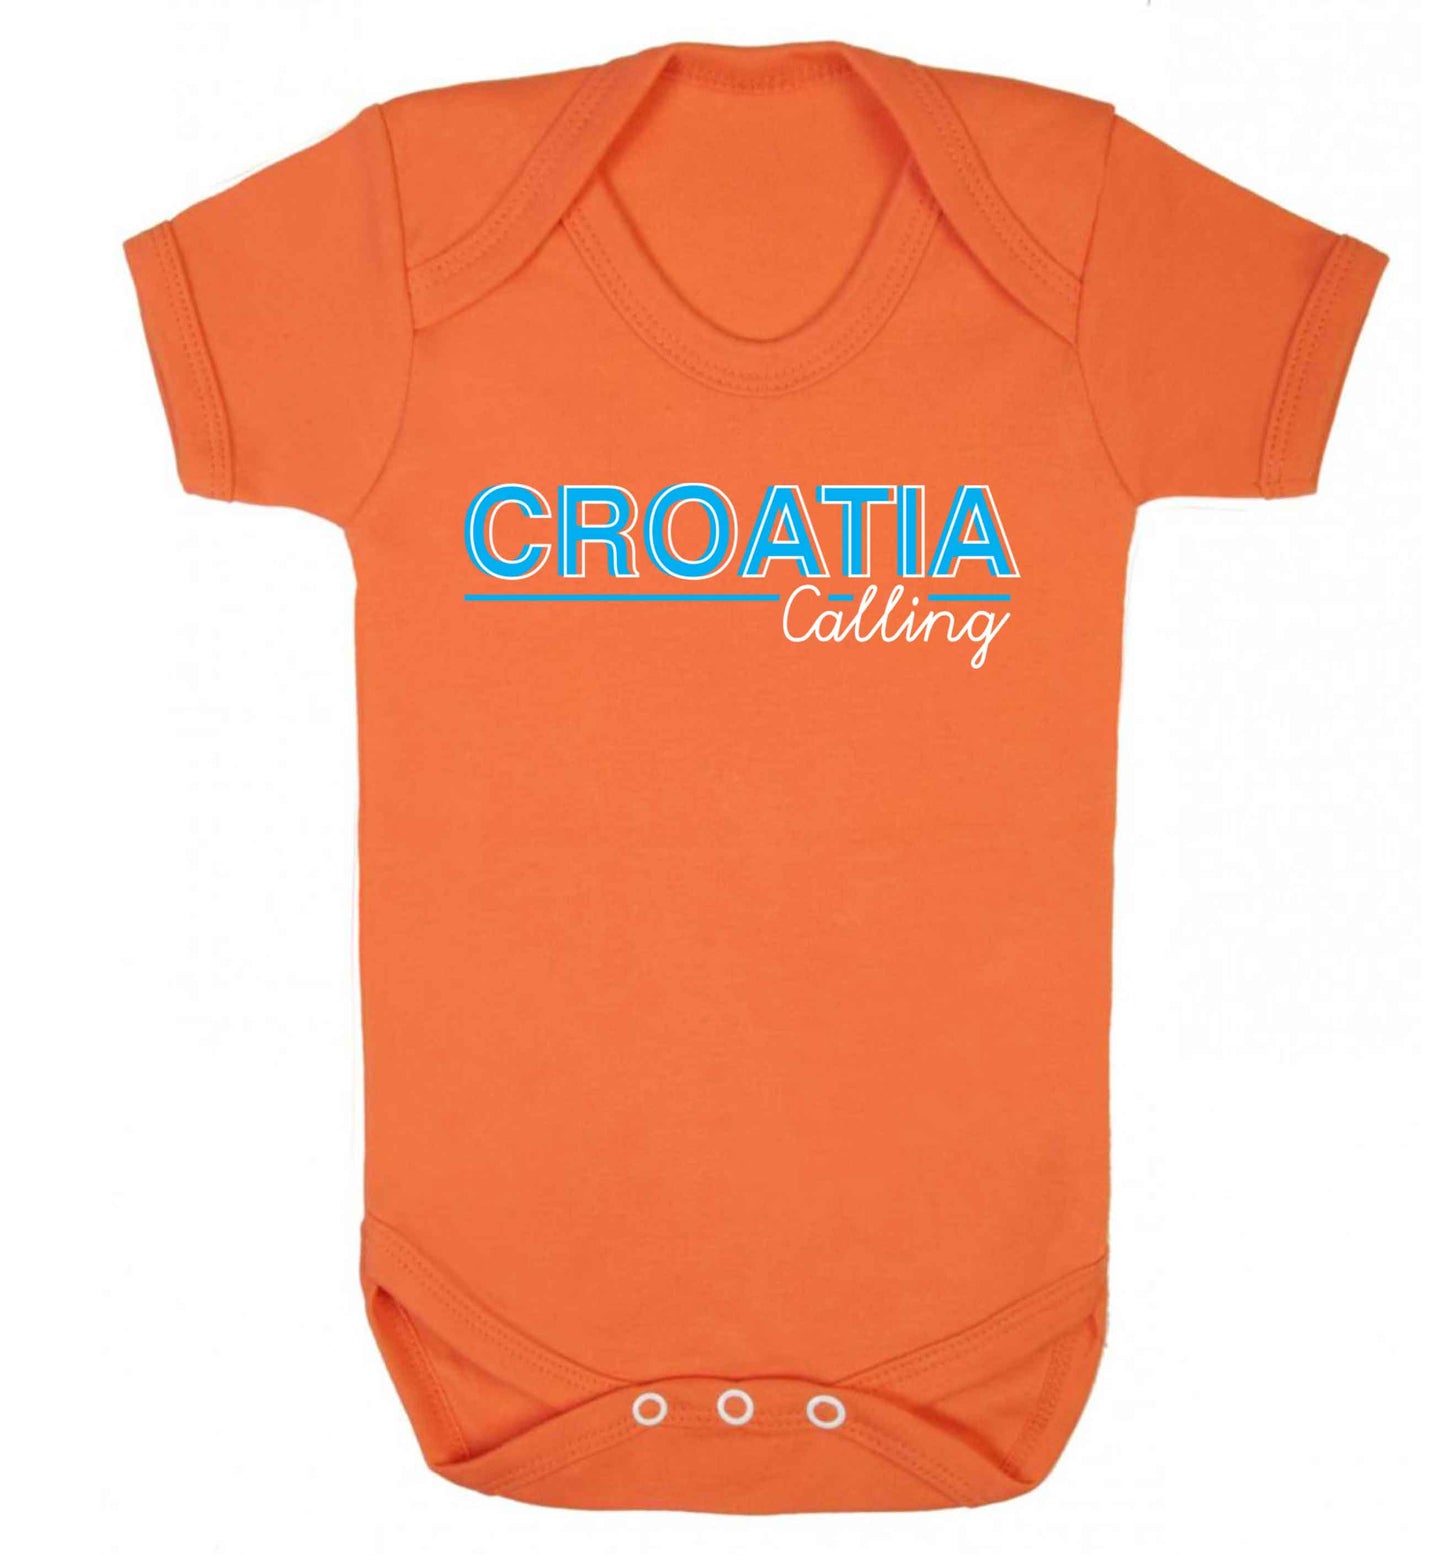 Croatia calling Baby Vest orange 18-24 months